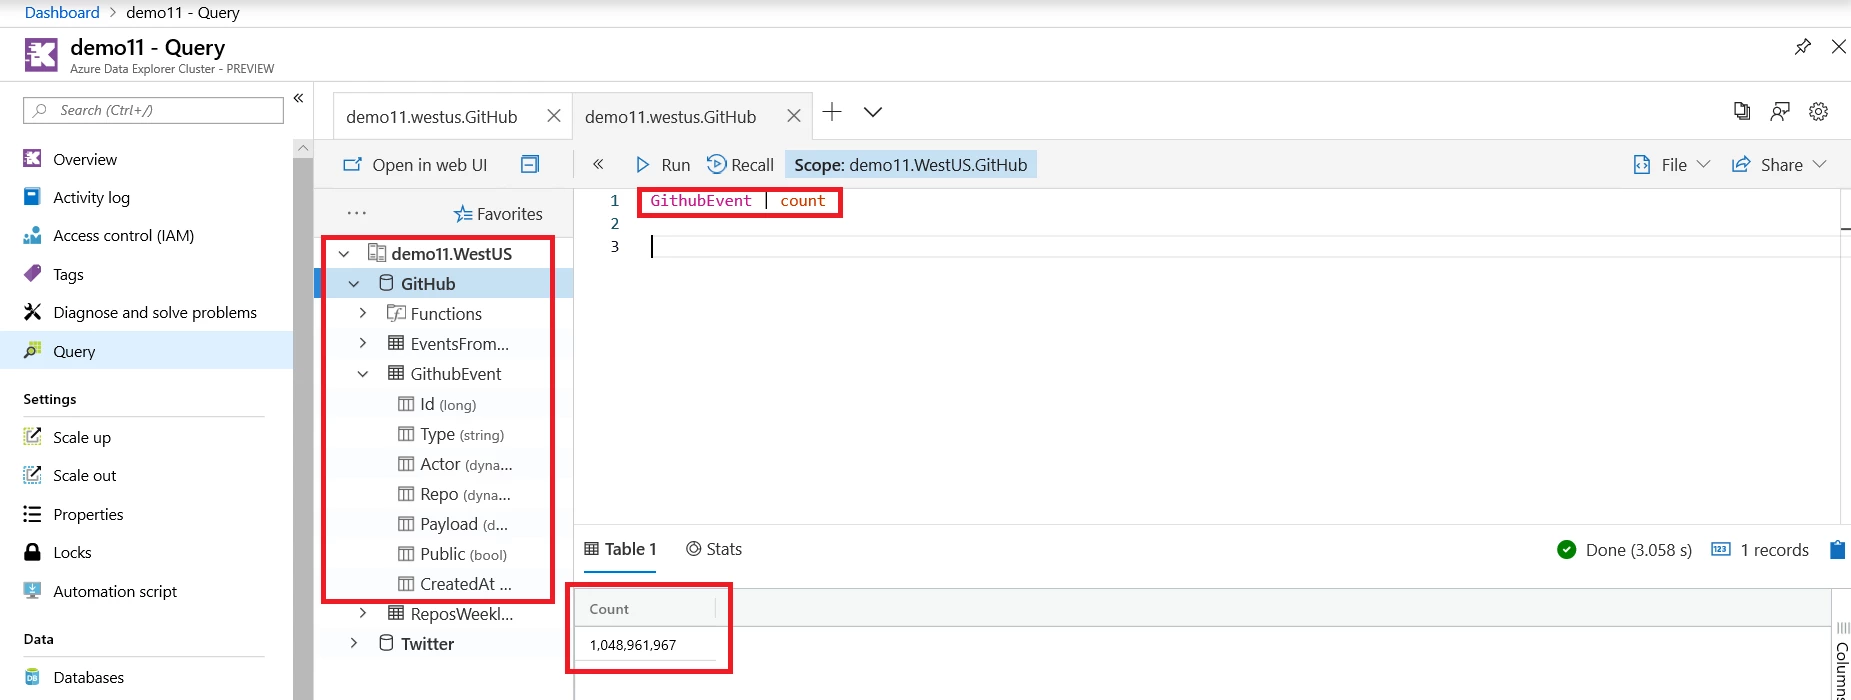 Screenshot of Azure Data Explorer demo11 and GitHub database